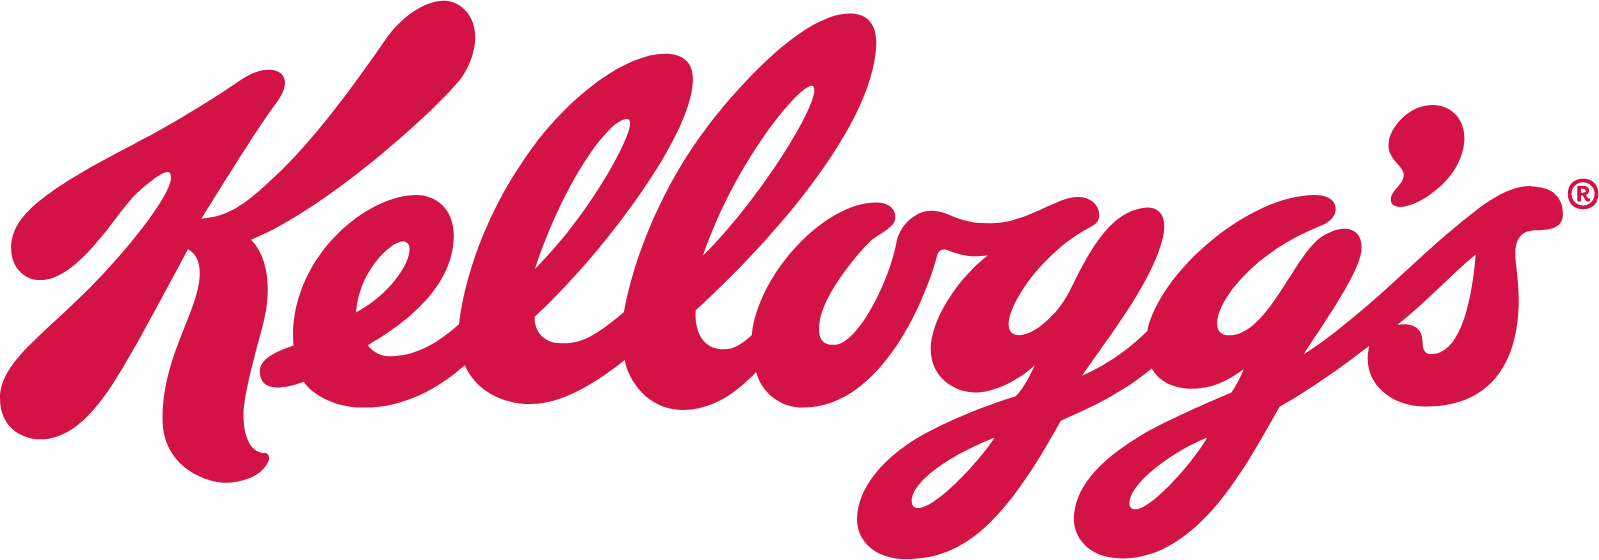 Kellogg's logo large (transparent PNG)